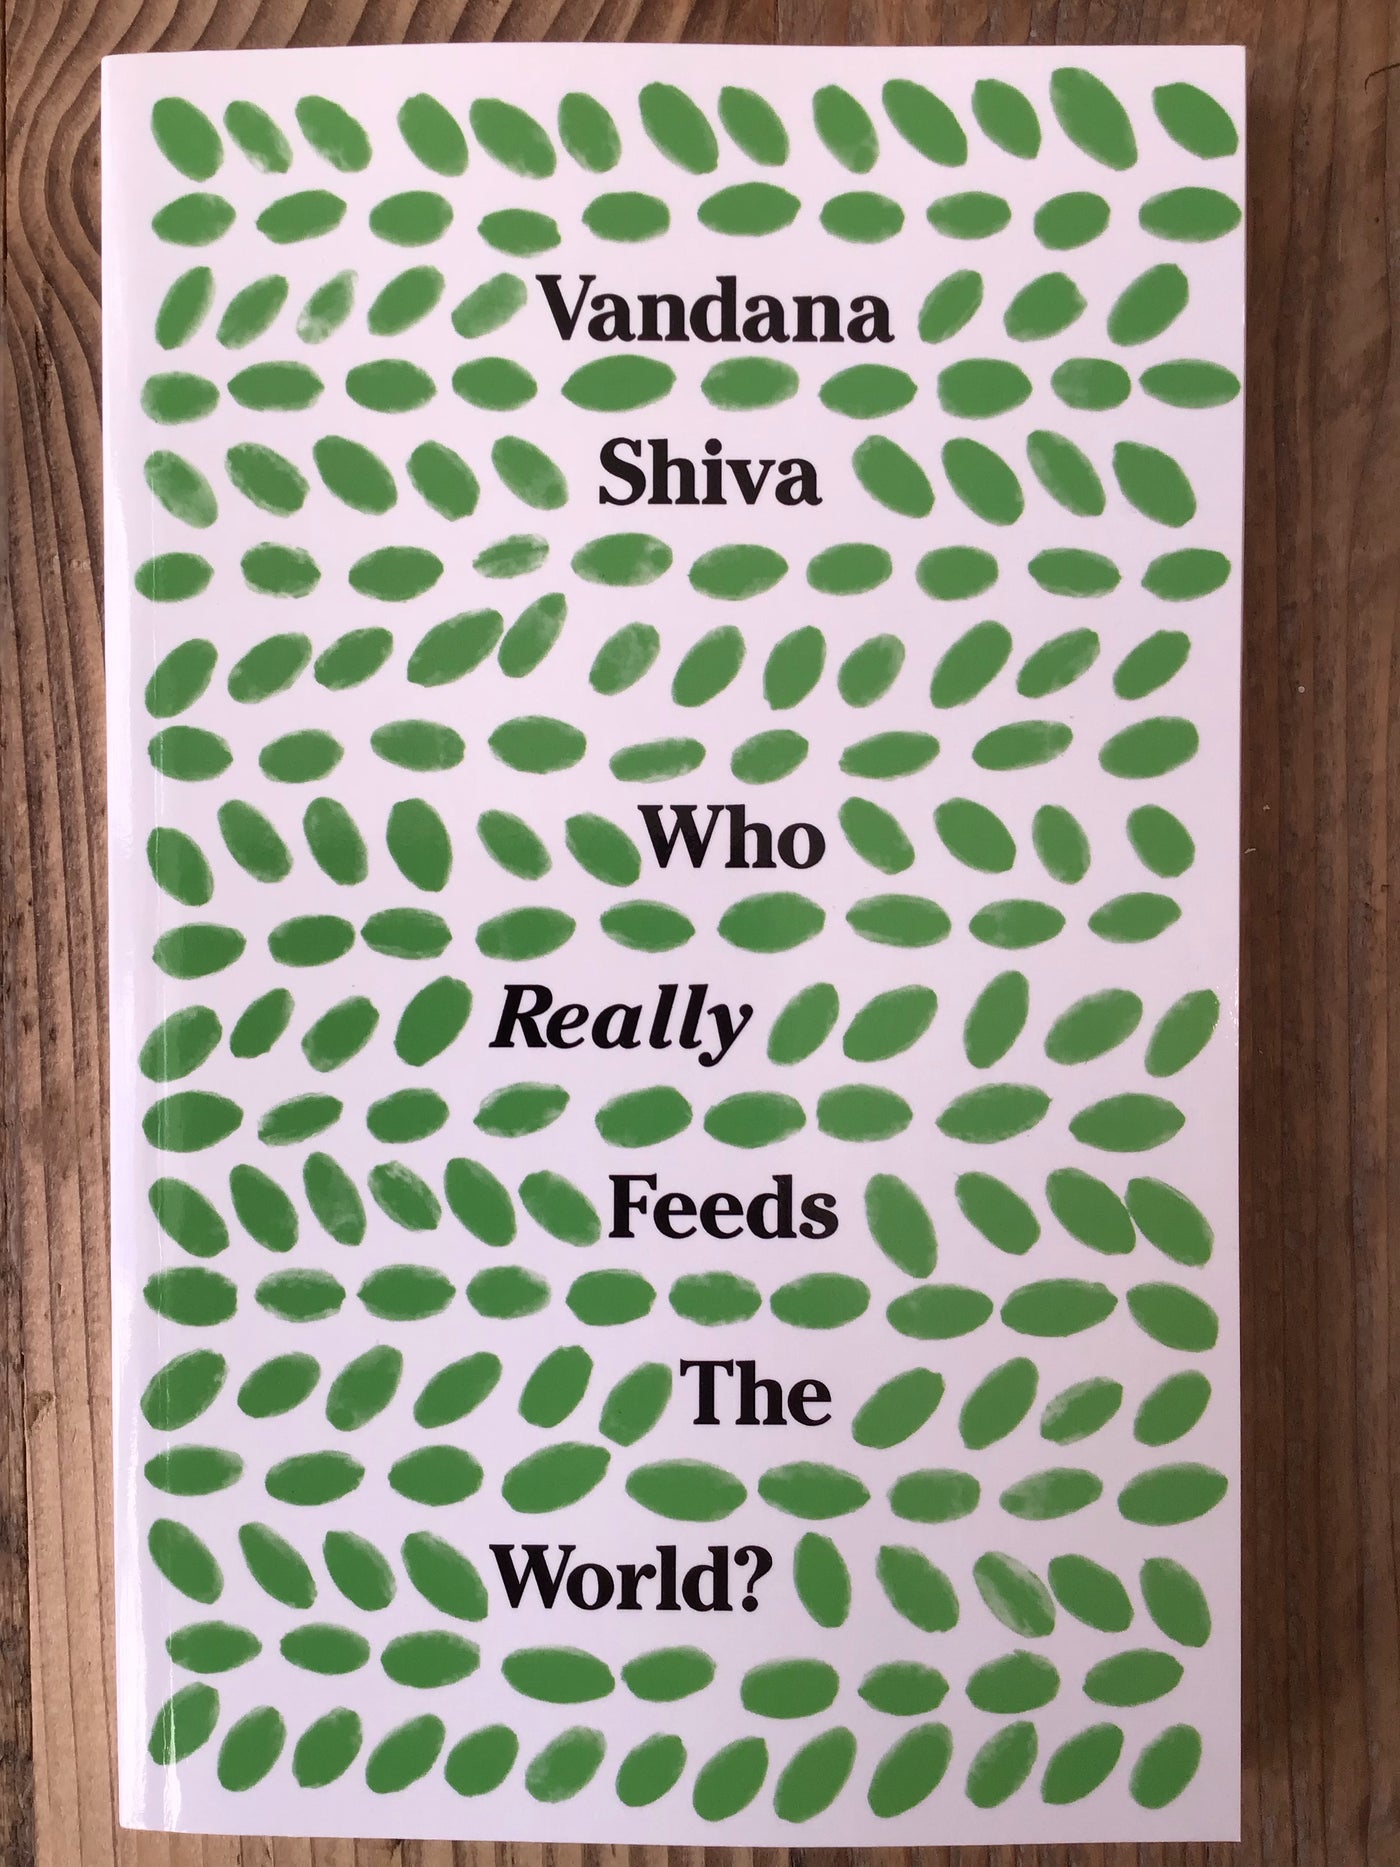 Who Really Feeds the World?